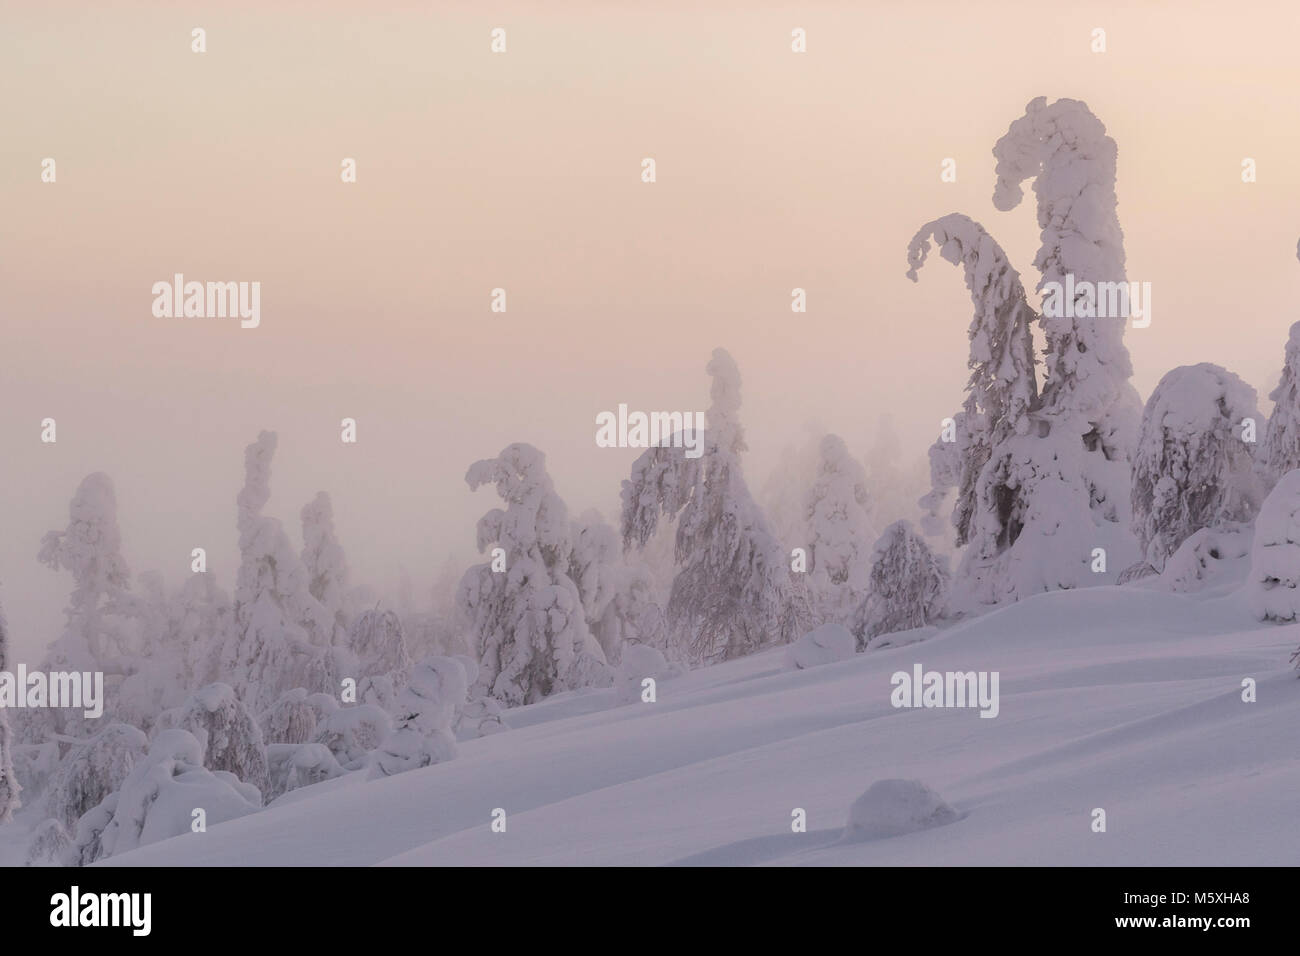 Snowy trees, winter landscape, Pyhä-Luosto National Park, Lapland, Finland Stock Photo